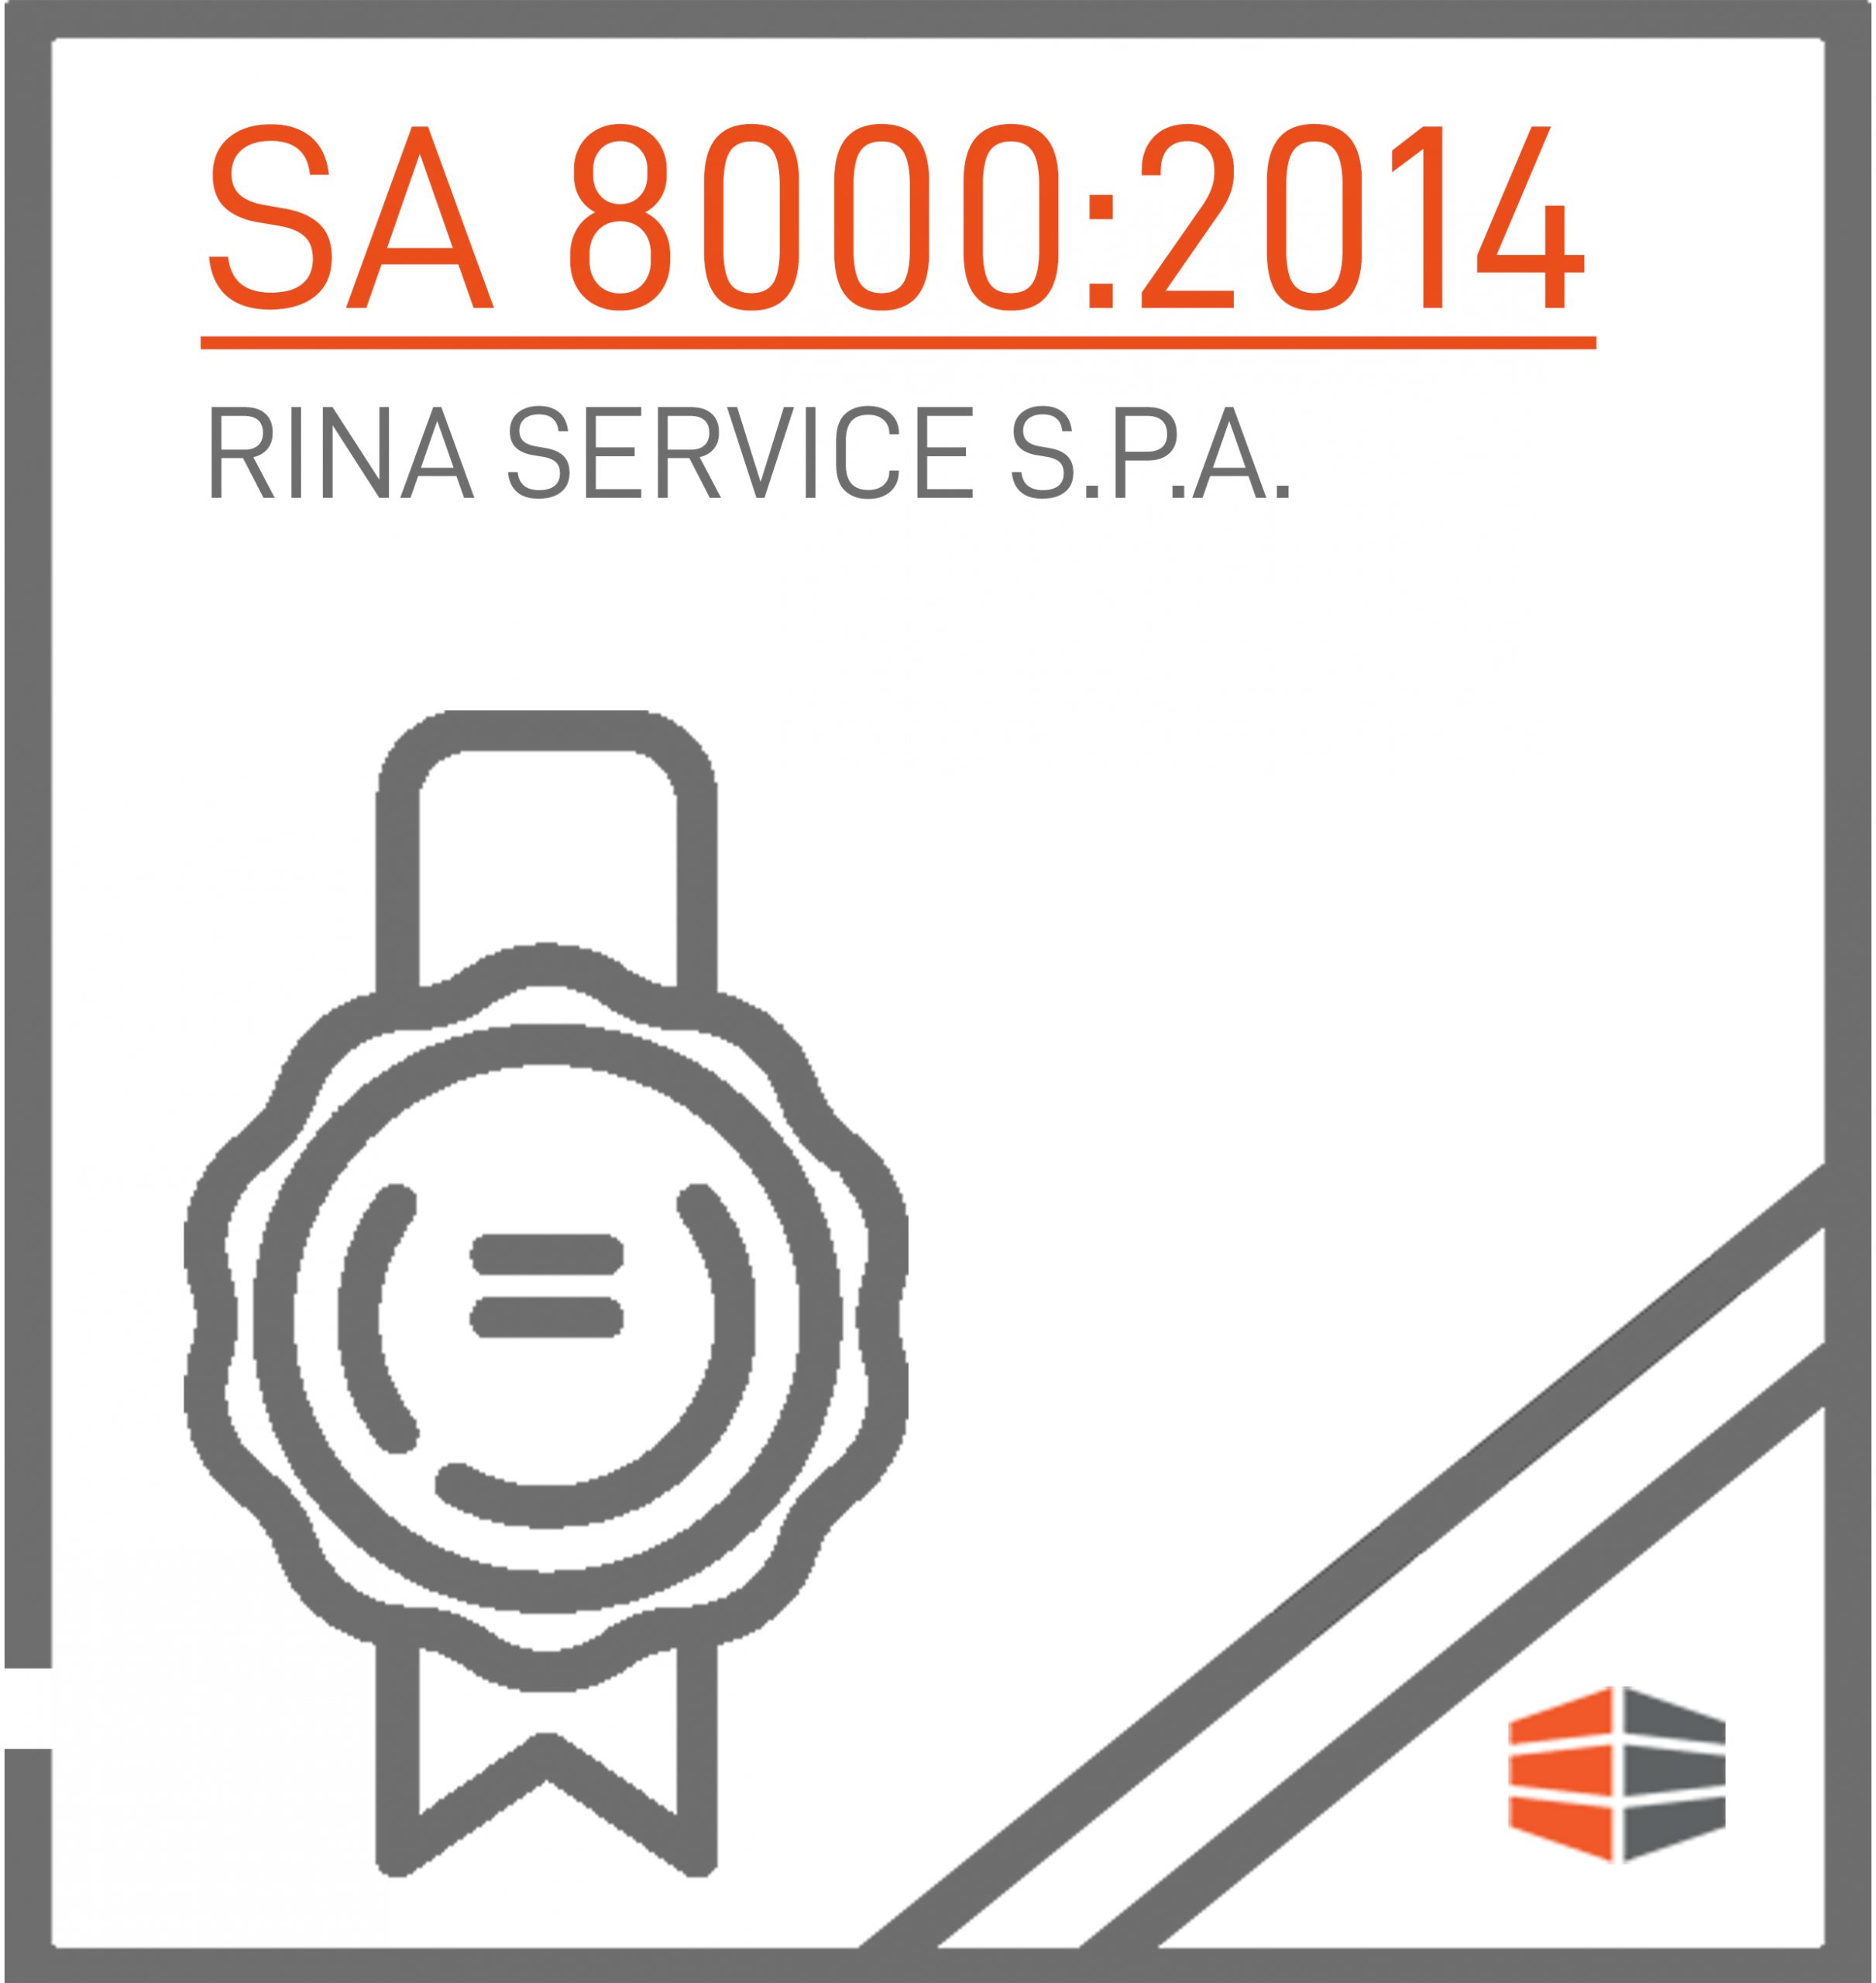 Certificazione SA 8000:2014 Rilasciata da RINA Service S.p.A.